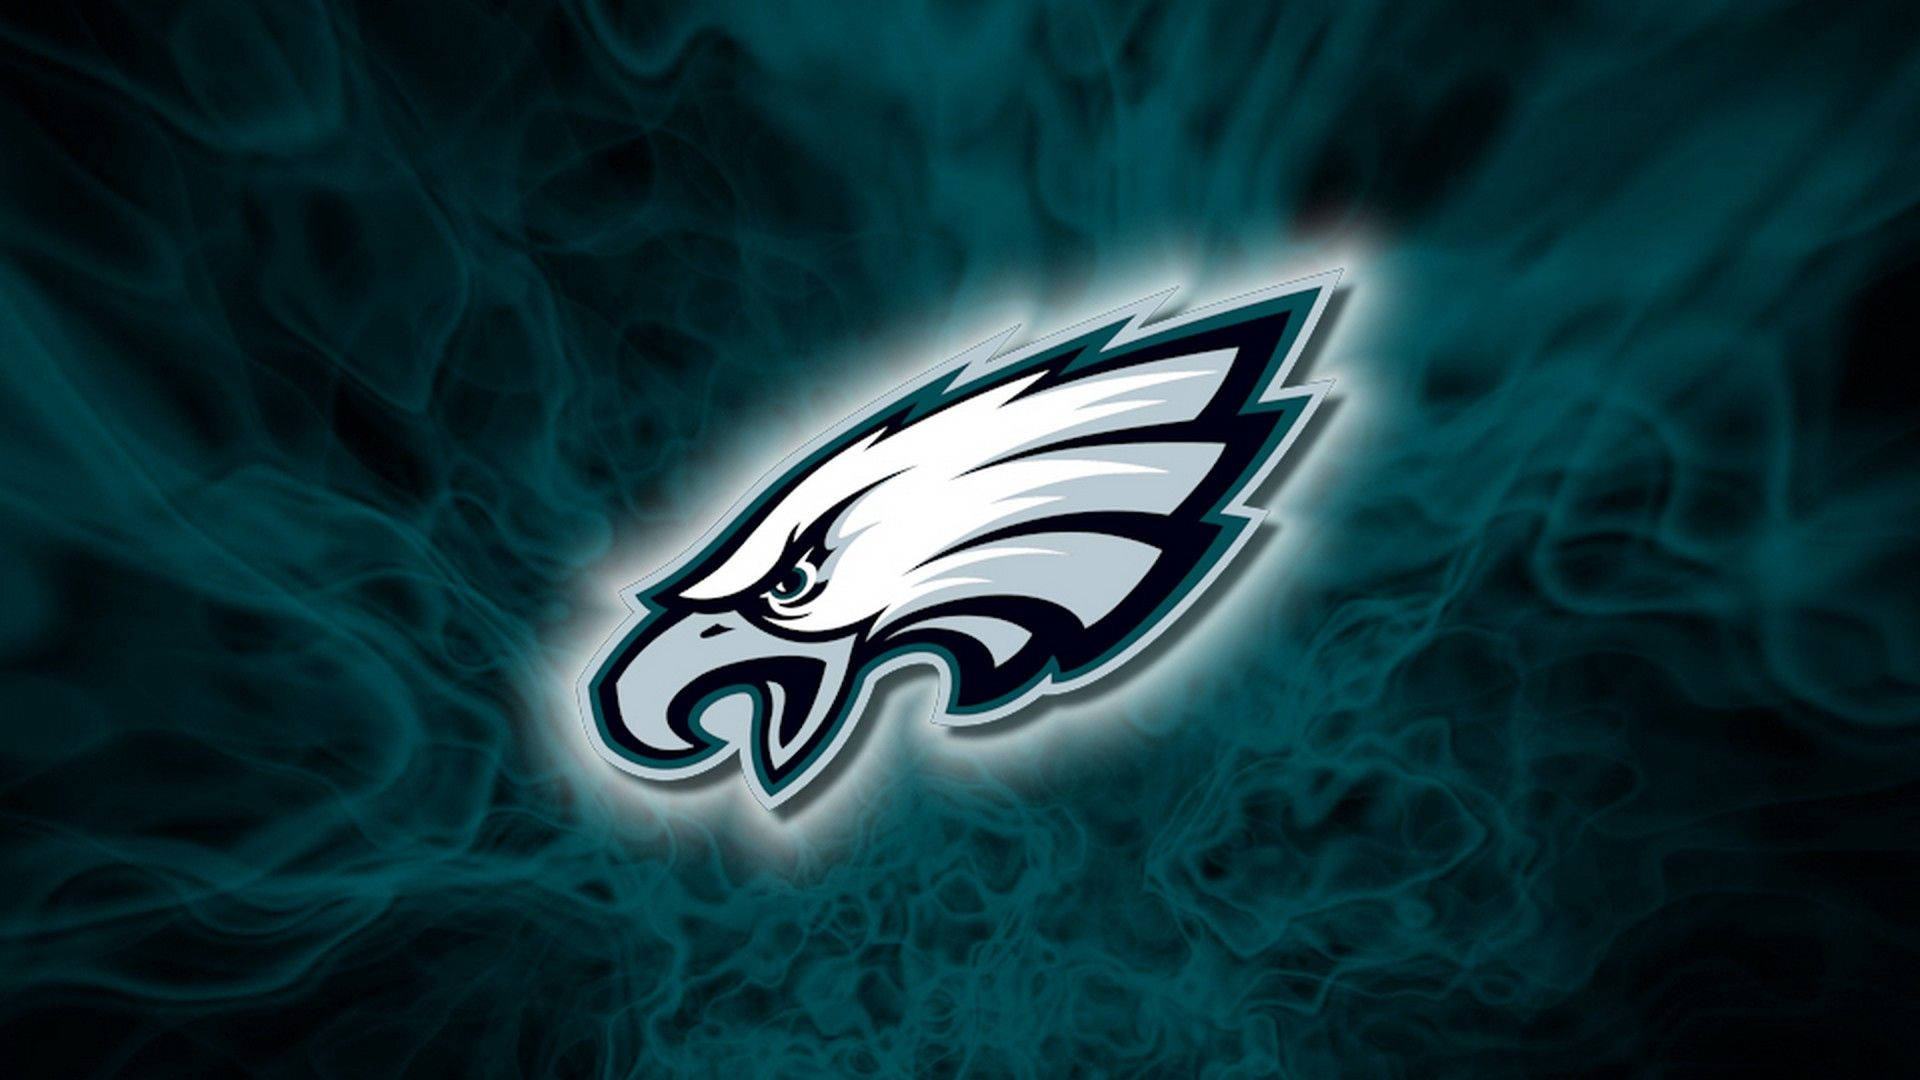 phil eagles logo